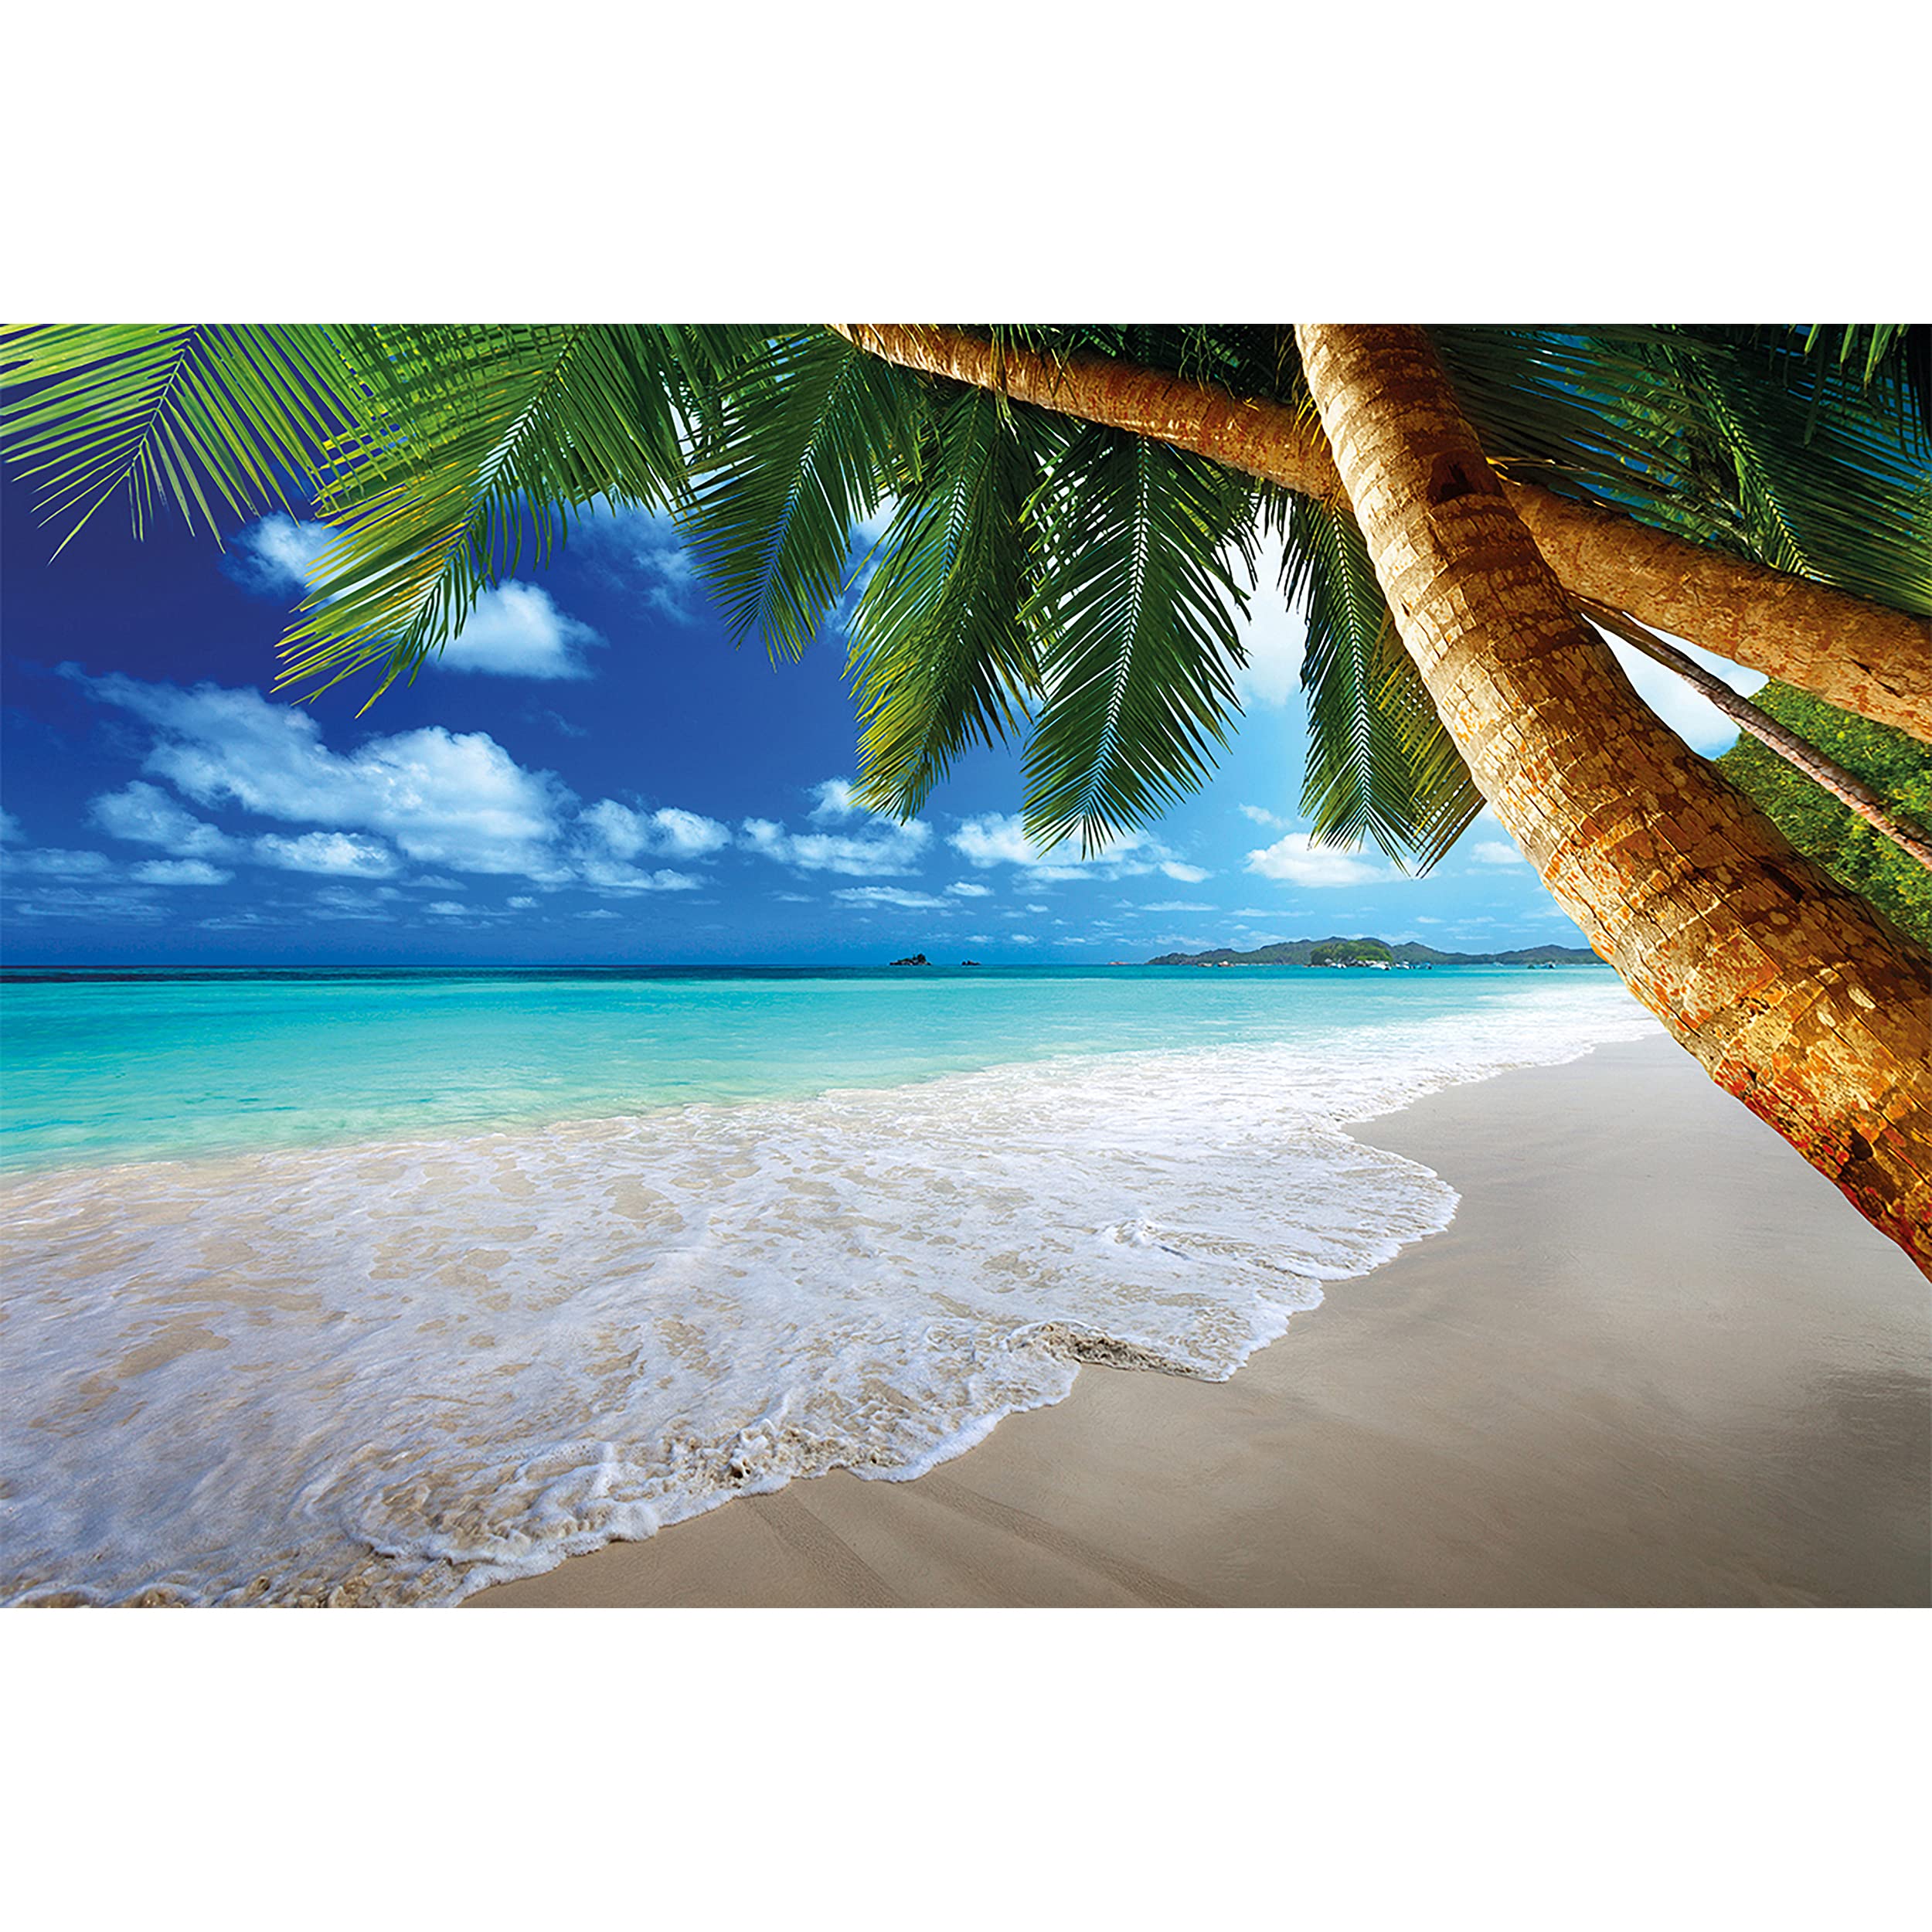 Photo Wallpaper – Palm Beach ‒ Picture Decoration Caribbean Dream Beach Bay Paradise Nature Tropical Island Trees Isle Blue Sky Image Decor Wall Mu...